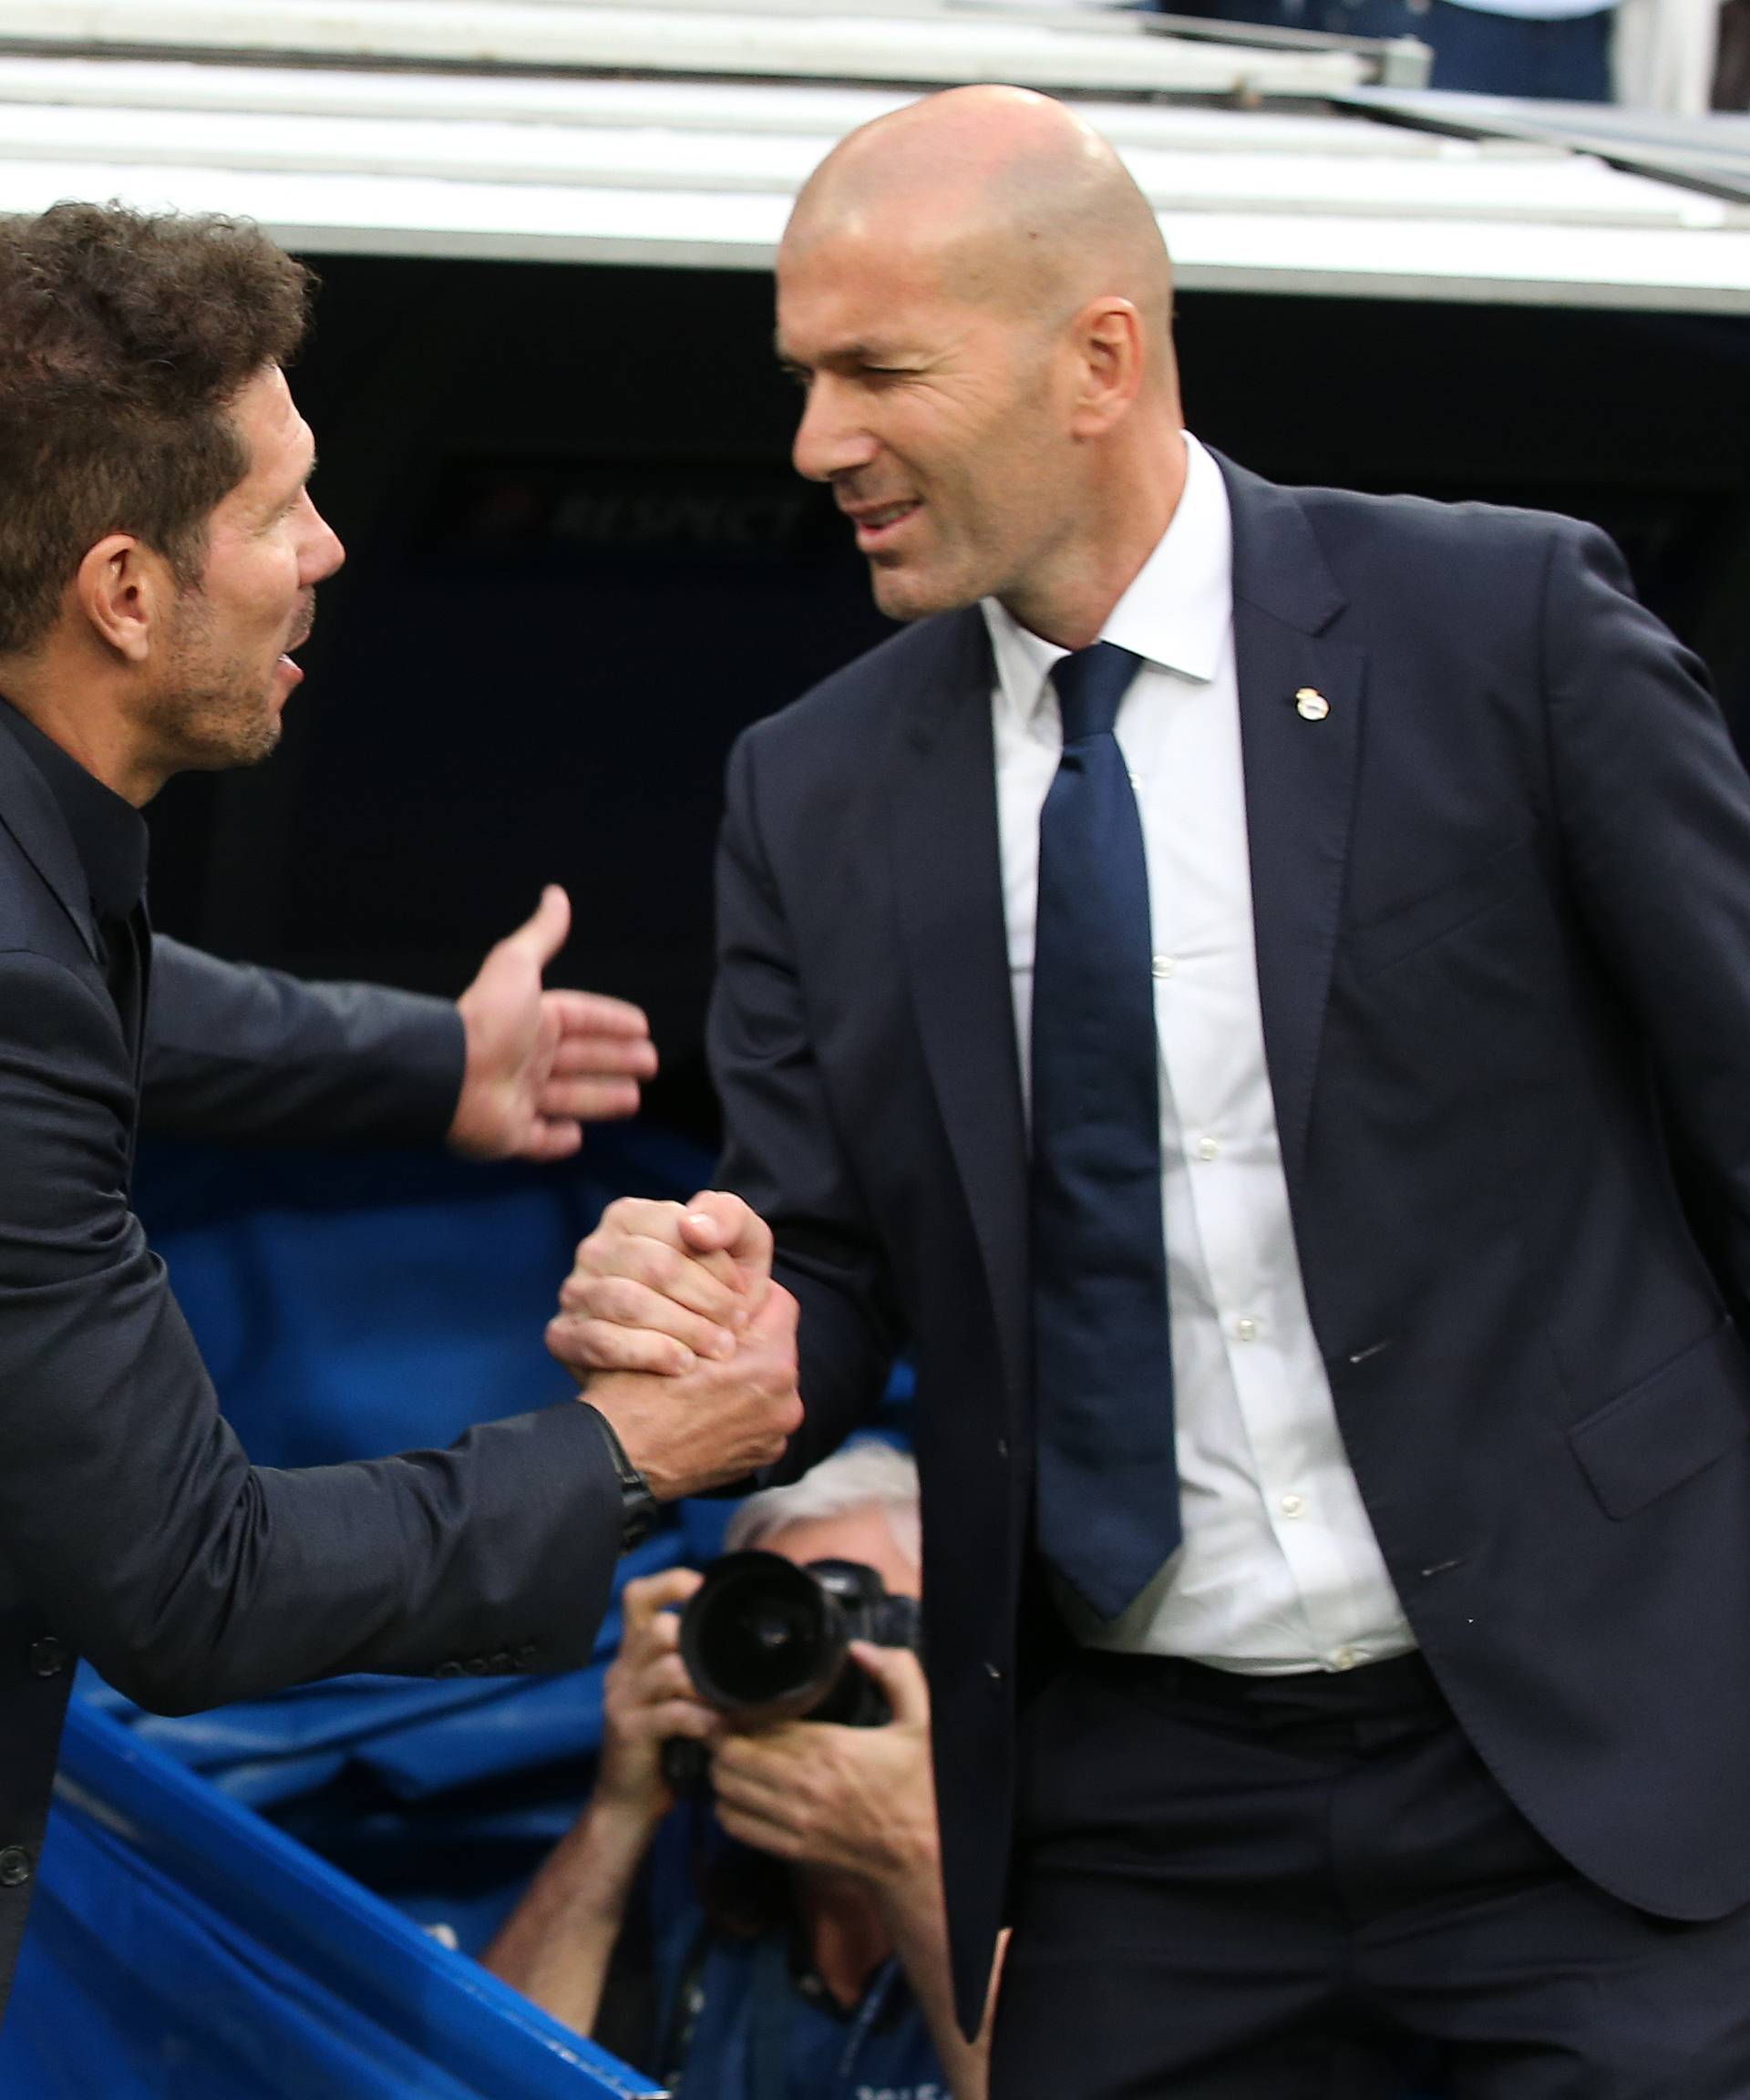 Real Madrid coach Zinedine Zidane greets Atletico Madrid coach Diego Simeone before the match